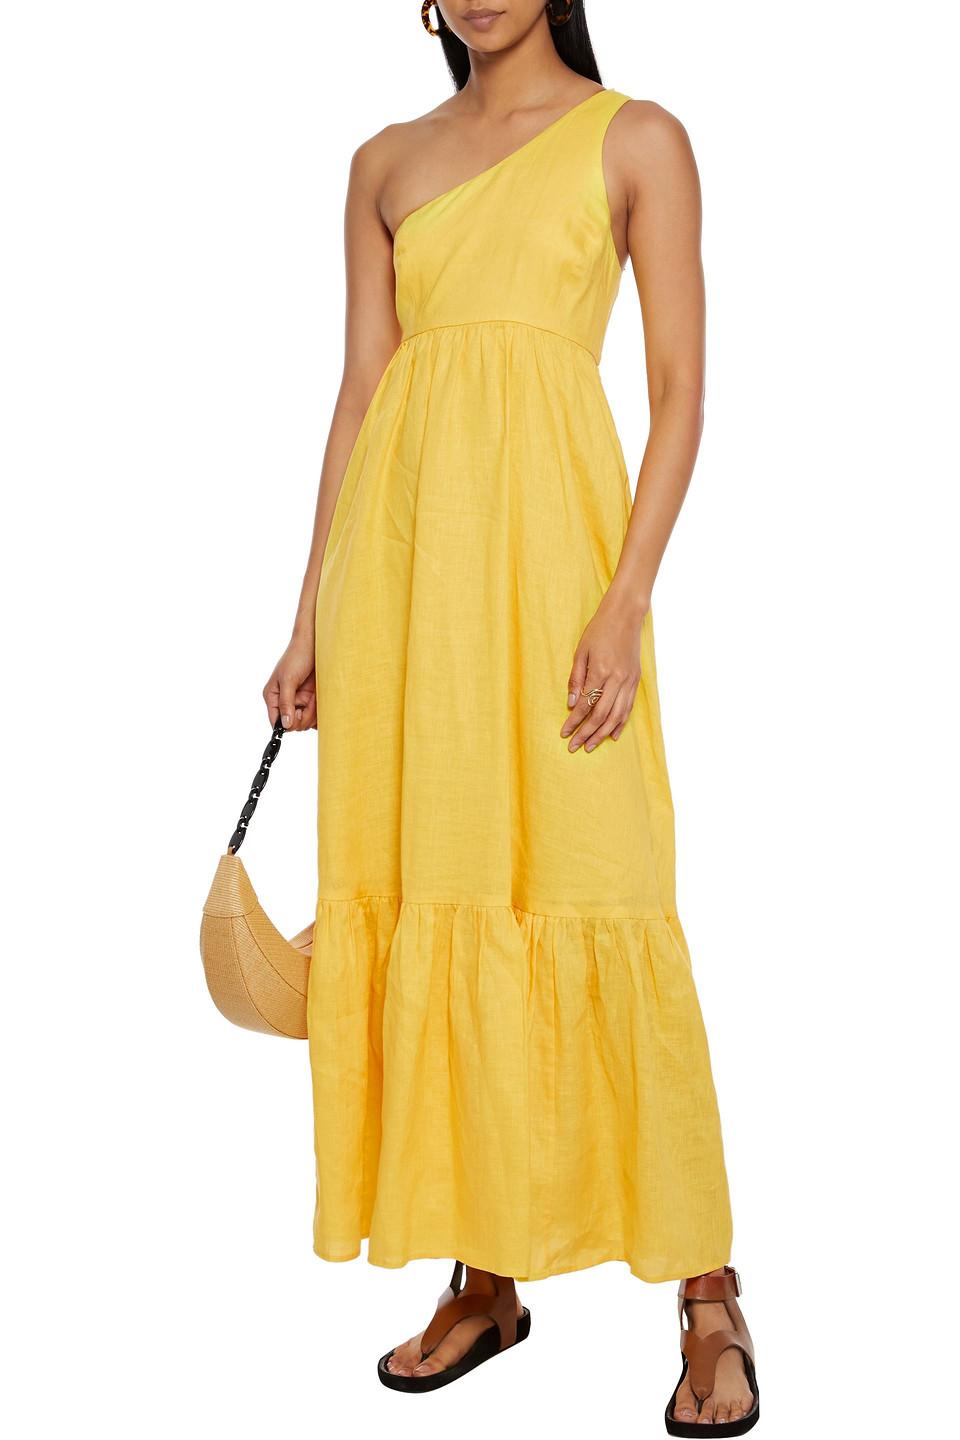 Zimmermann Juliette One-shoulder Bow-detailed Linen Maxi Dress in Yellow |  Lyst